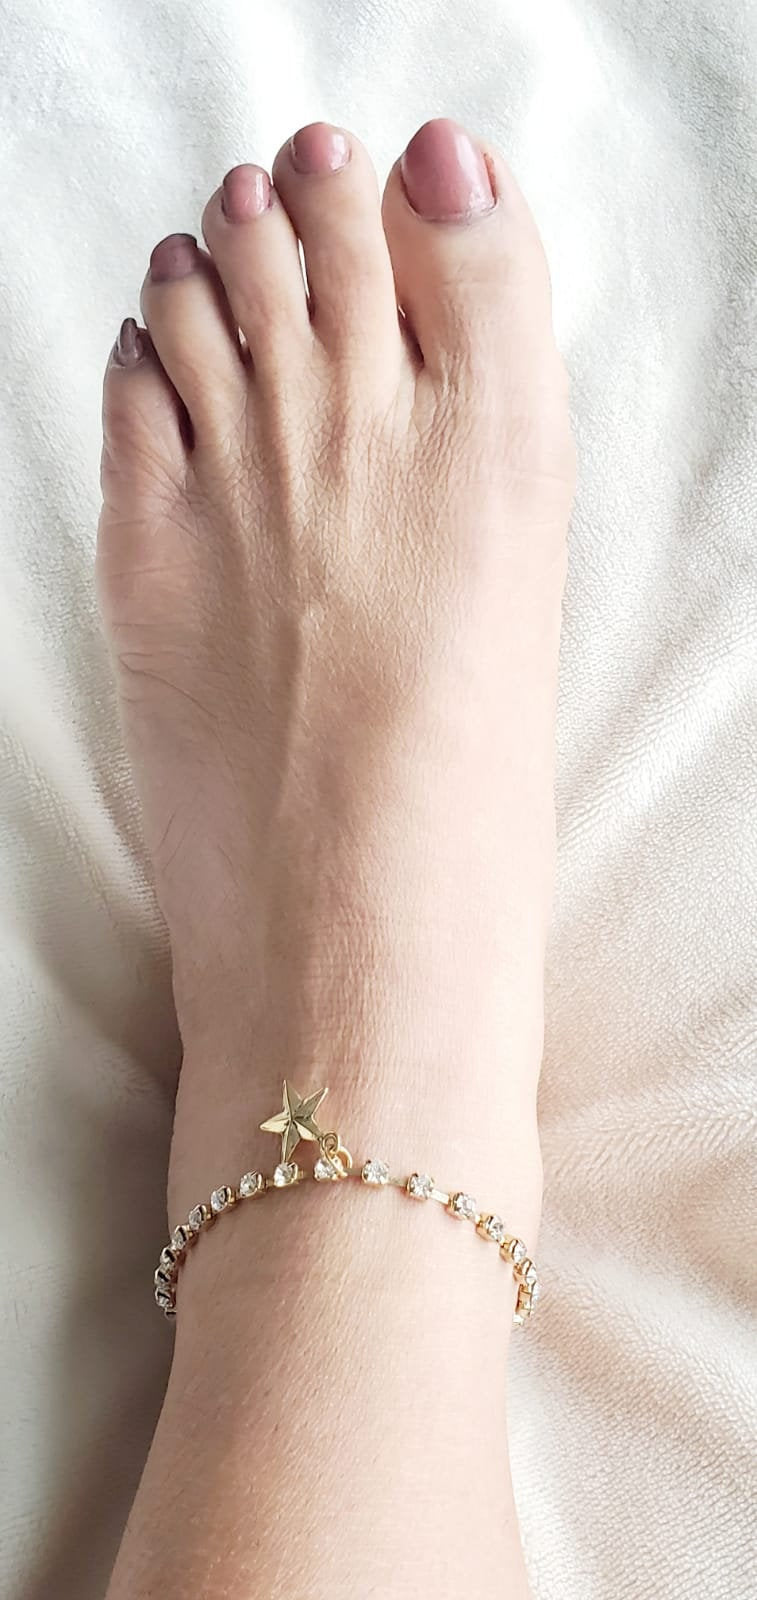 Star charm Rhinestone Anklet for Women, Foot Jewelry, Ankle Bracelet, Minimalist Anklet, diamond Ankle Bracelet, beach wedding  gift for her